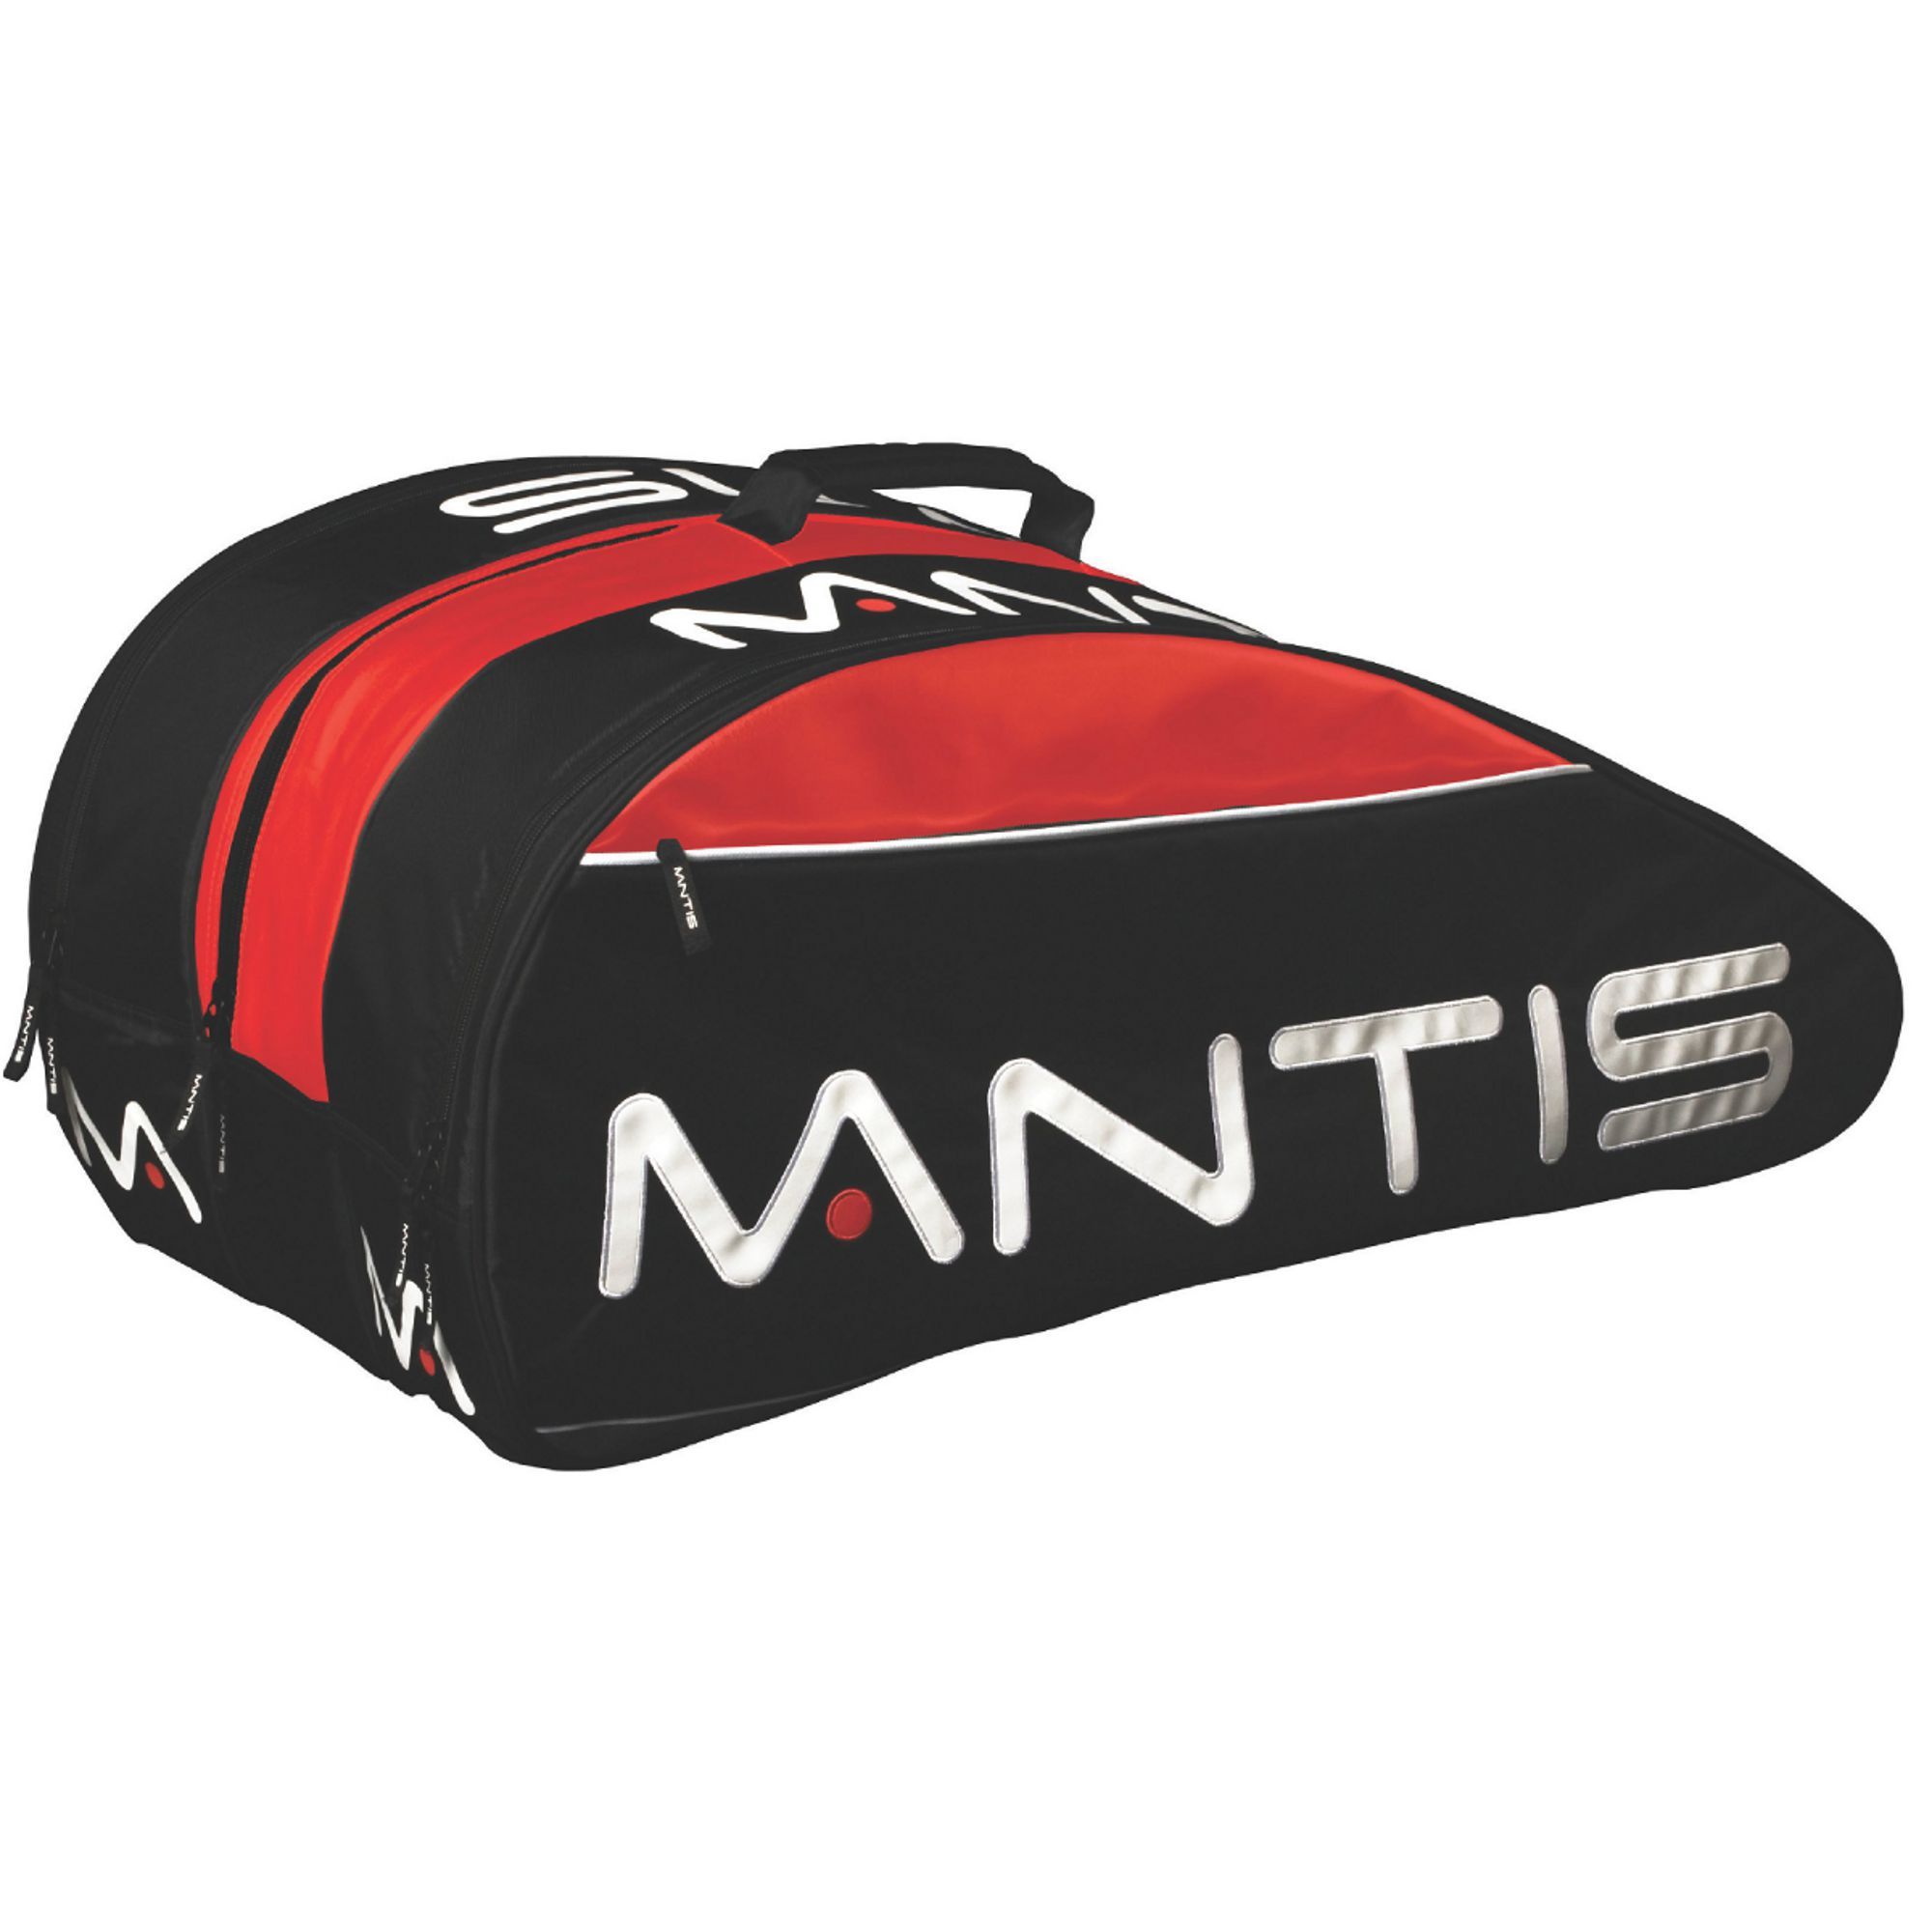 Mantis Thermo Bag 12 Racket - Black Red